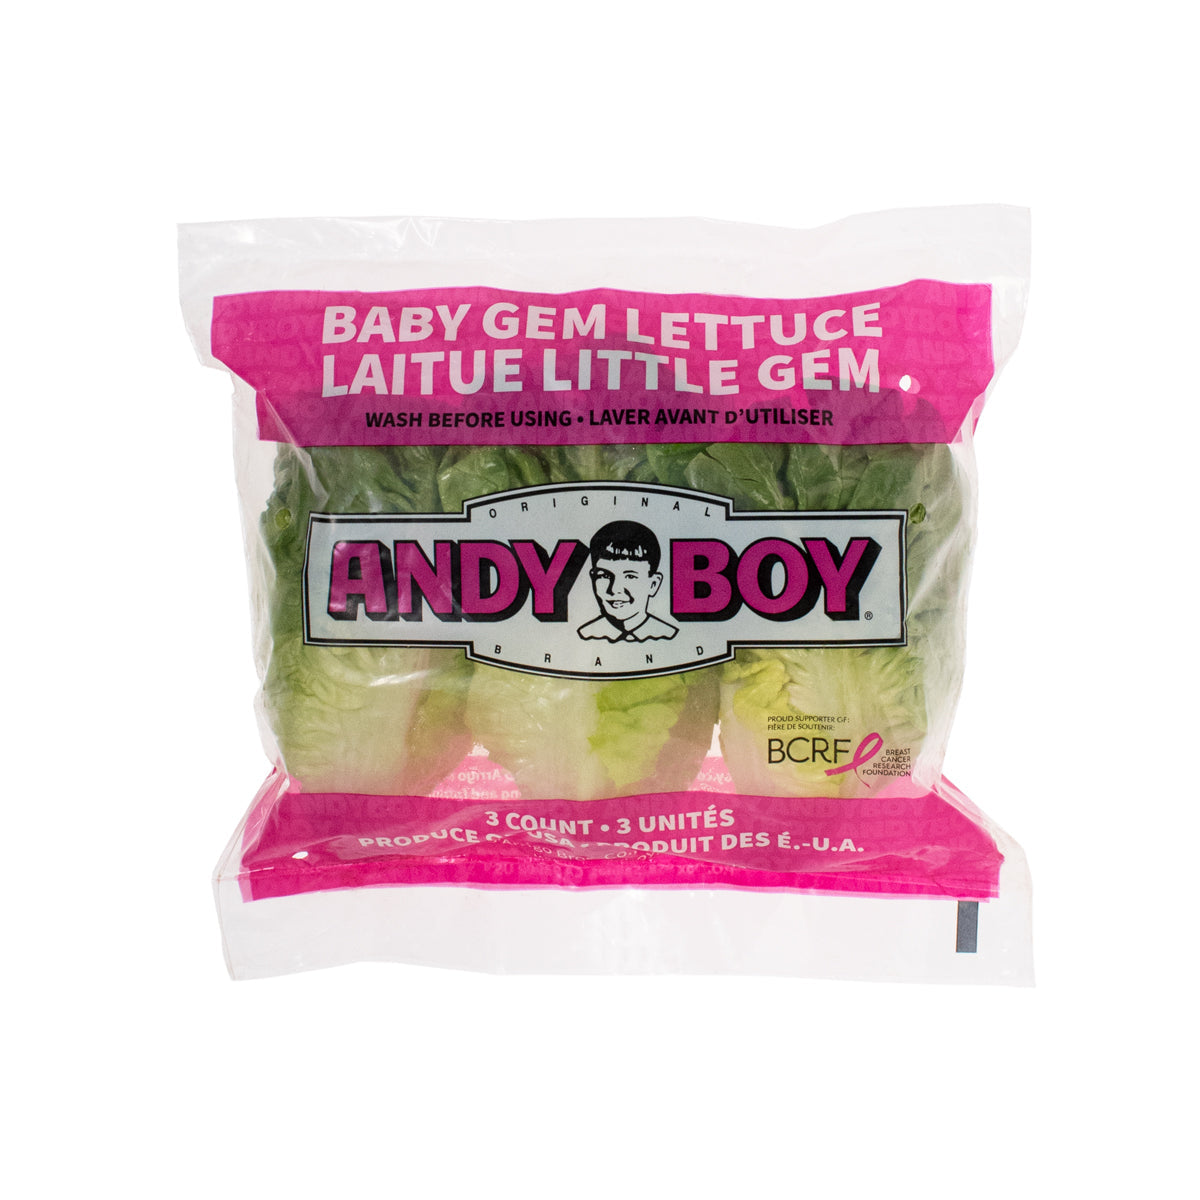 D'Arrigo Andy Boy Little Gem Lettuce 3 CT